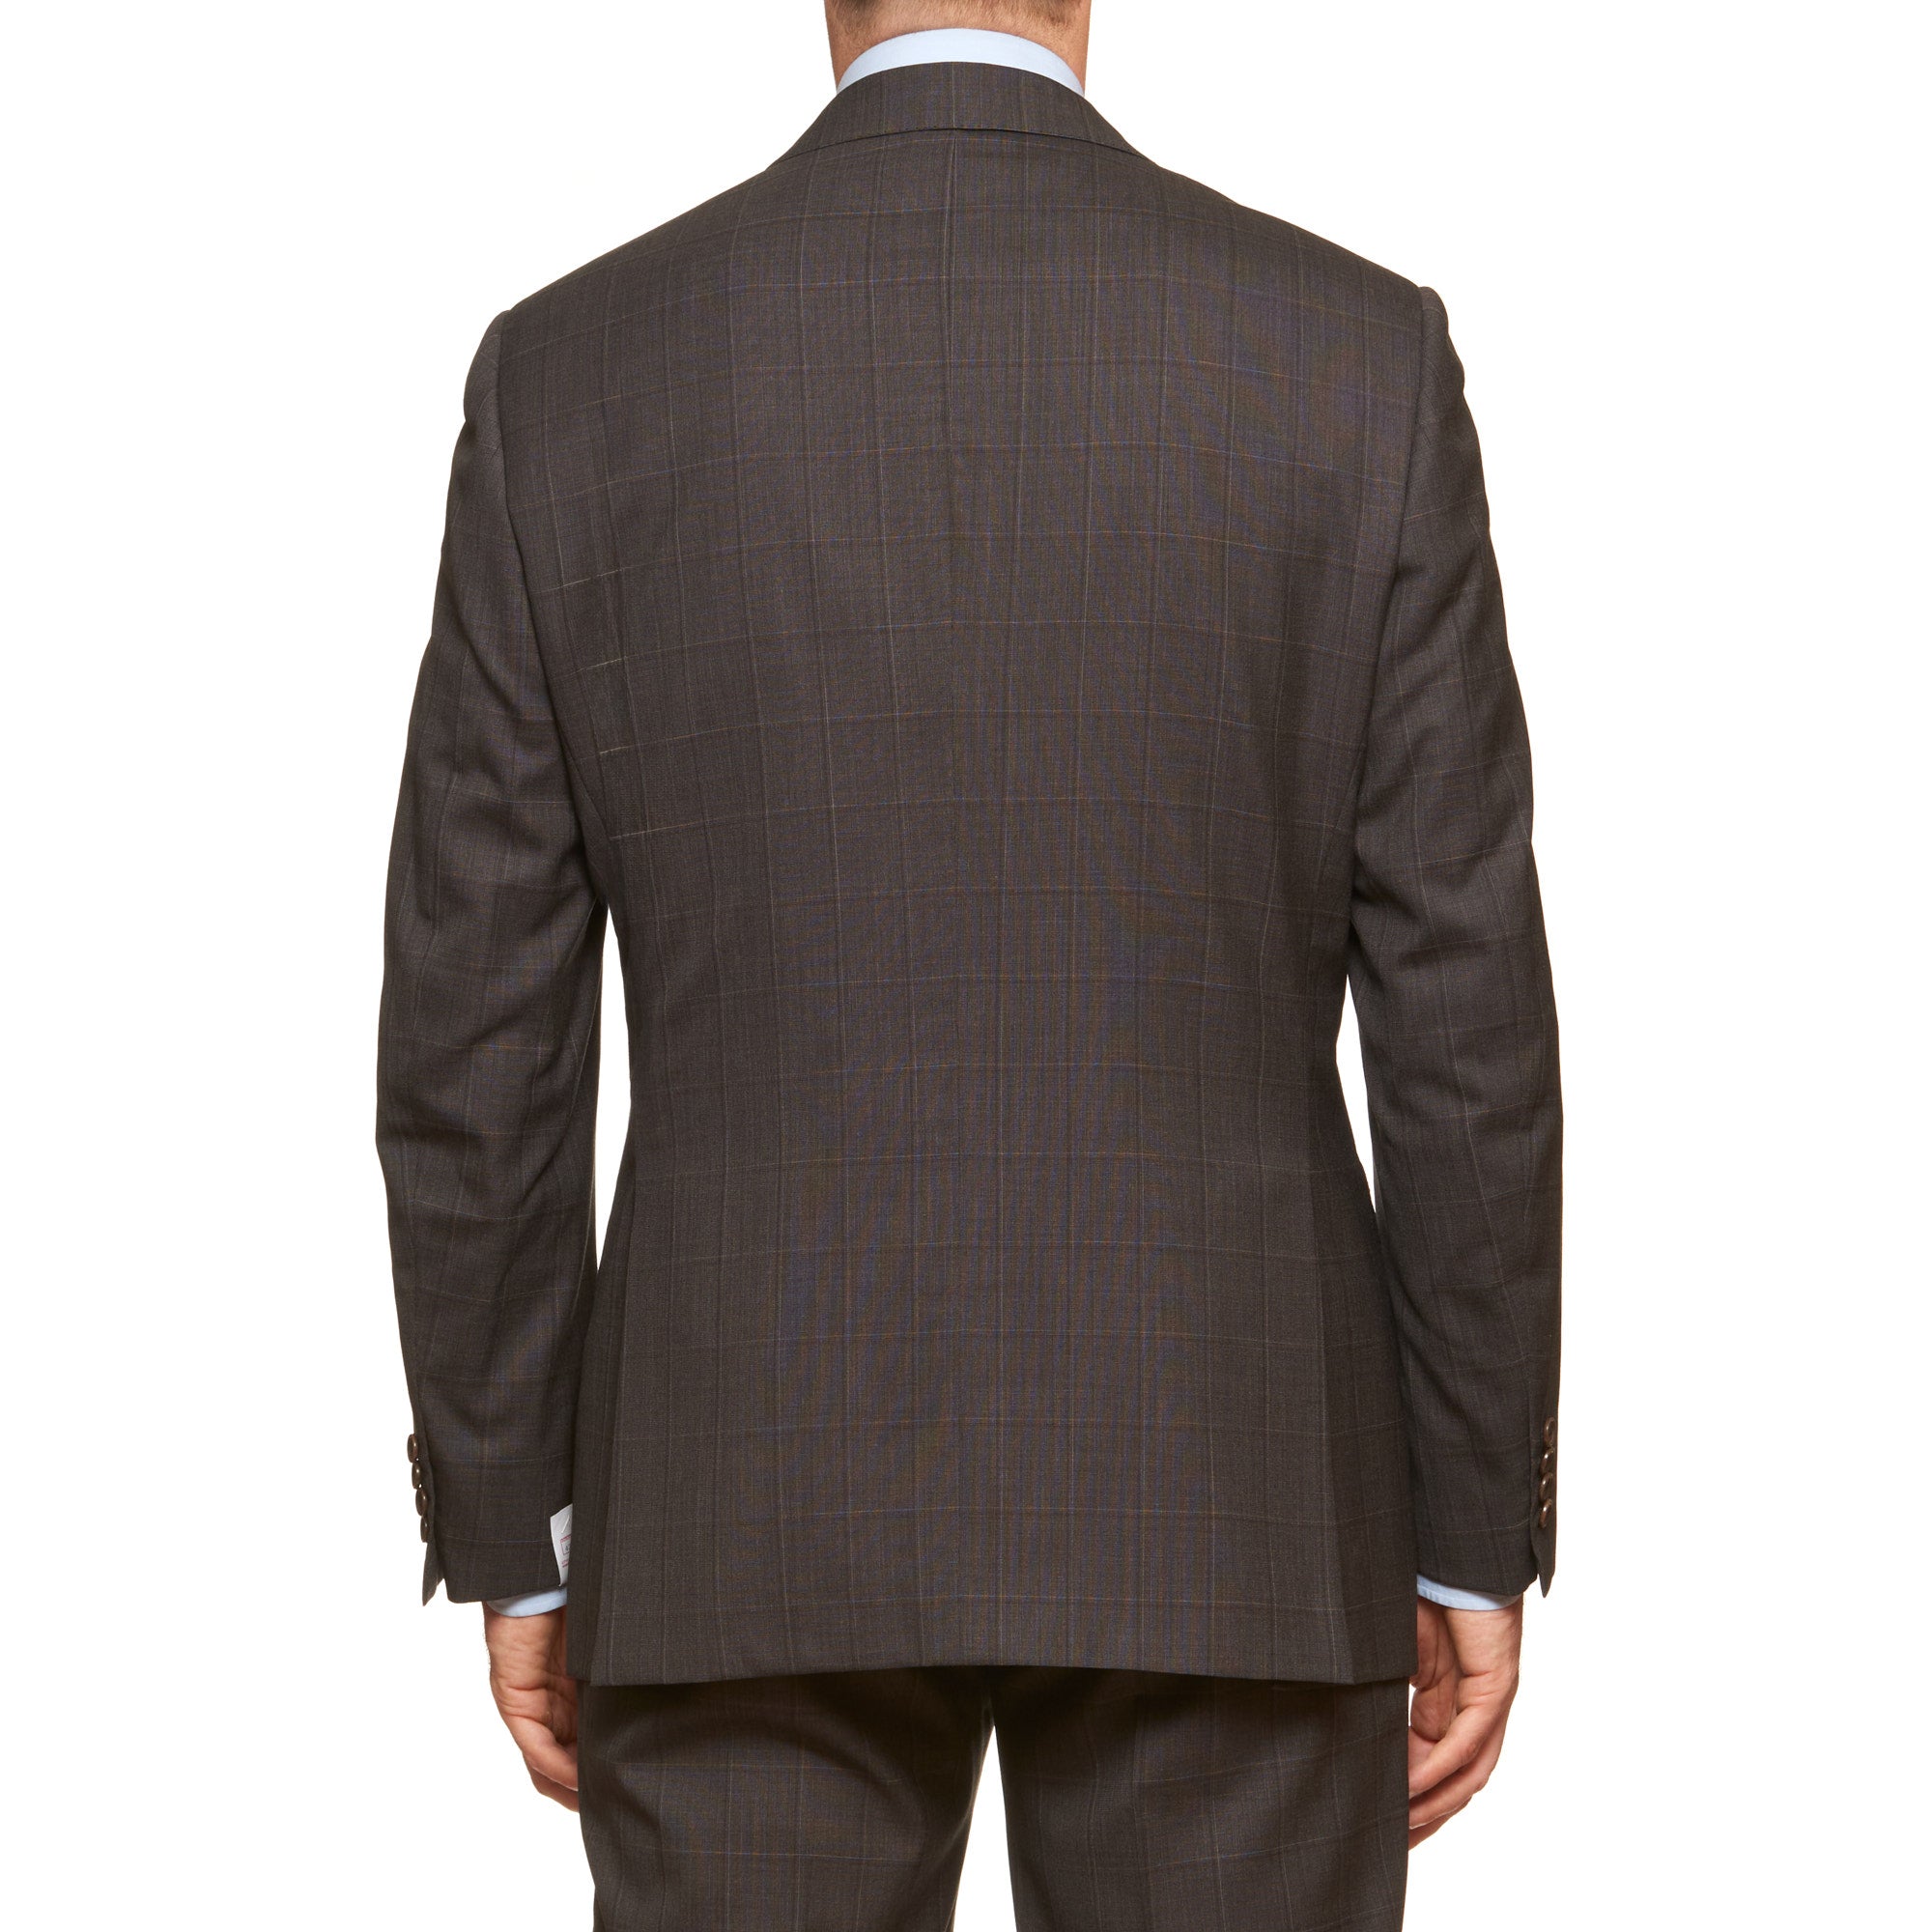 BRIONI "SECOLO" Handmade Gray Plaid Wool Super 150' Suit EU 52 NEW US 42